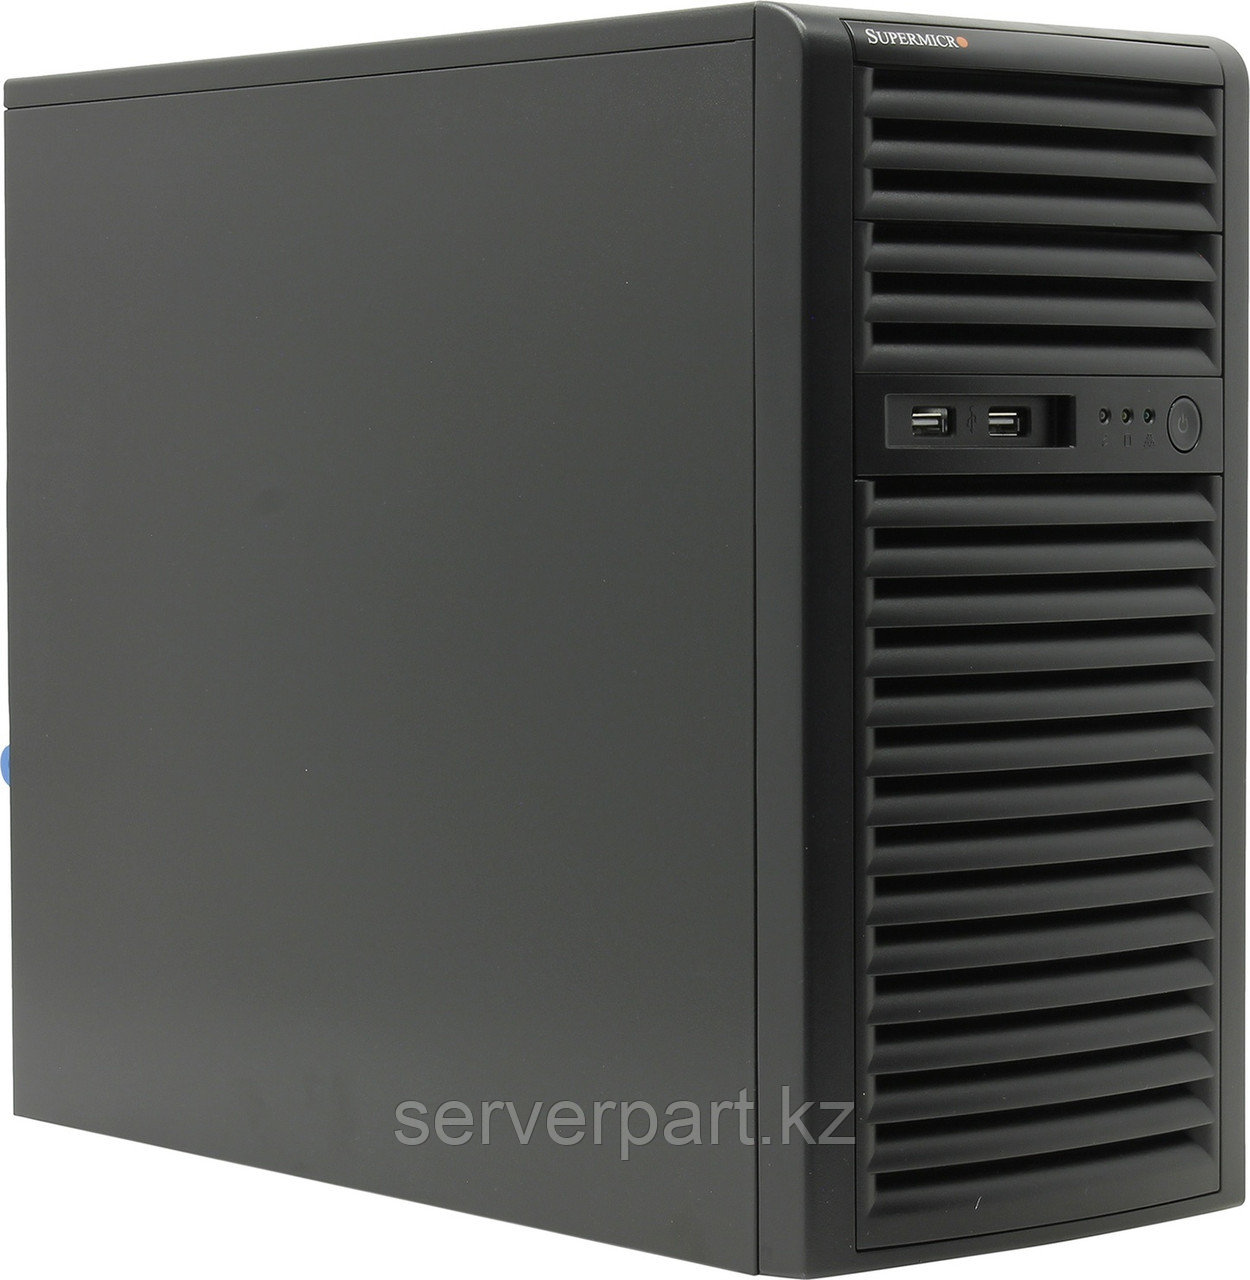 Сервер Supermicro SYS-5039D Tower/4-core intel xeon E3-1220v6 3GHz/48GB EUDIMM/1x480GB SSD MU Hyb, фото 1